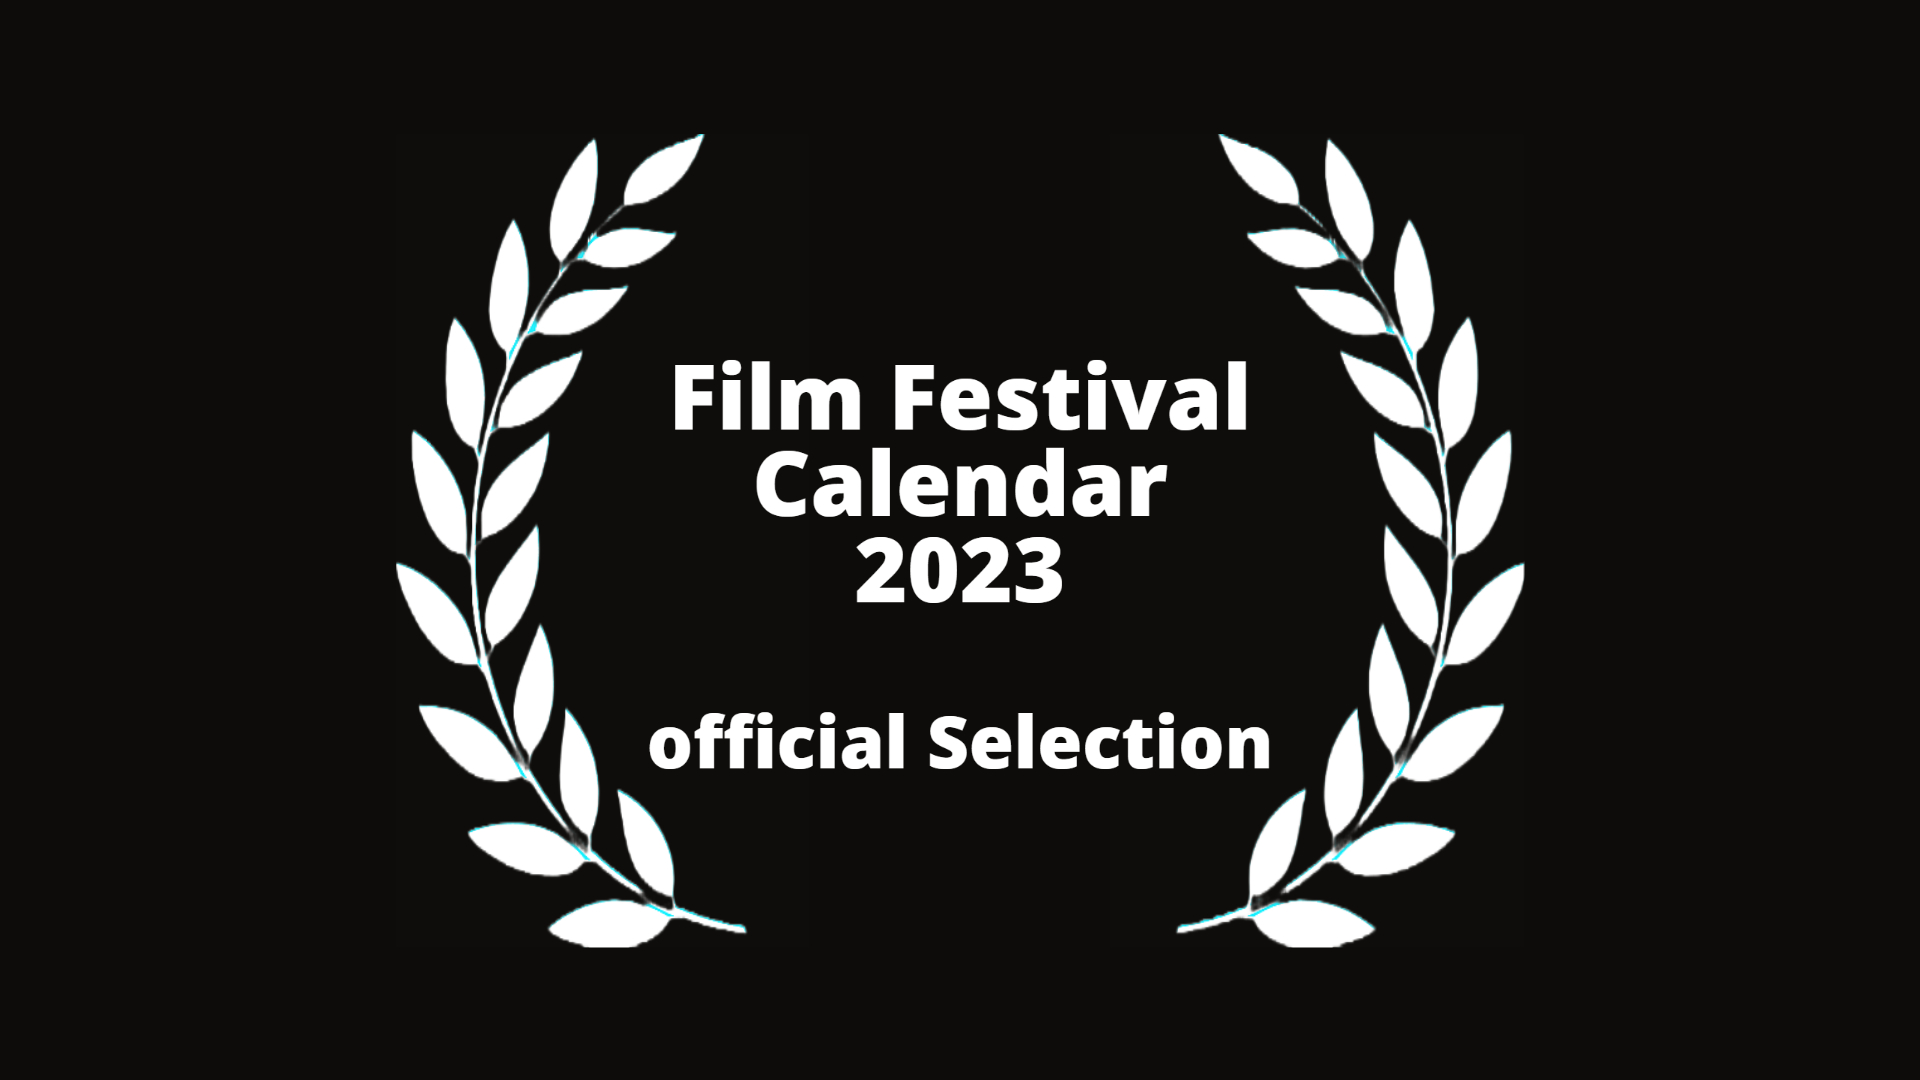 Complete Film Festival Calendar 2023